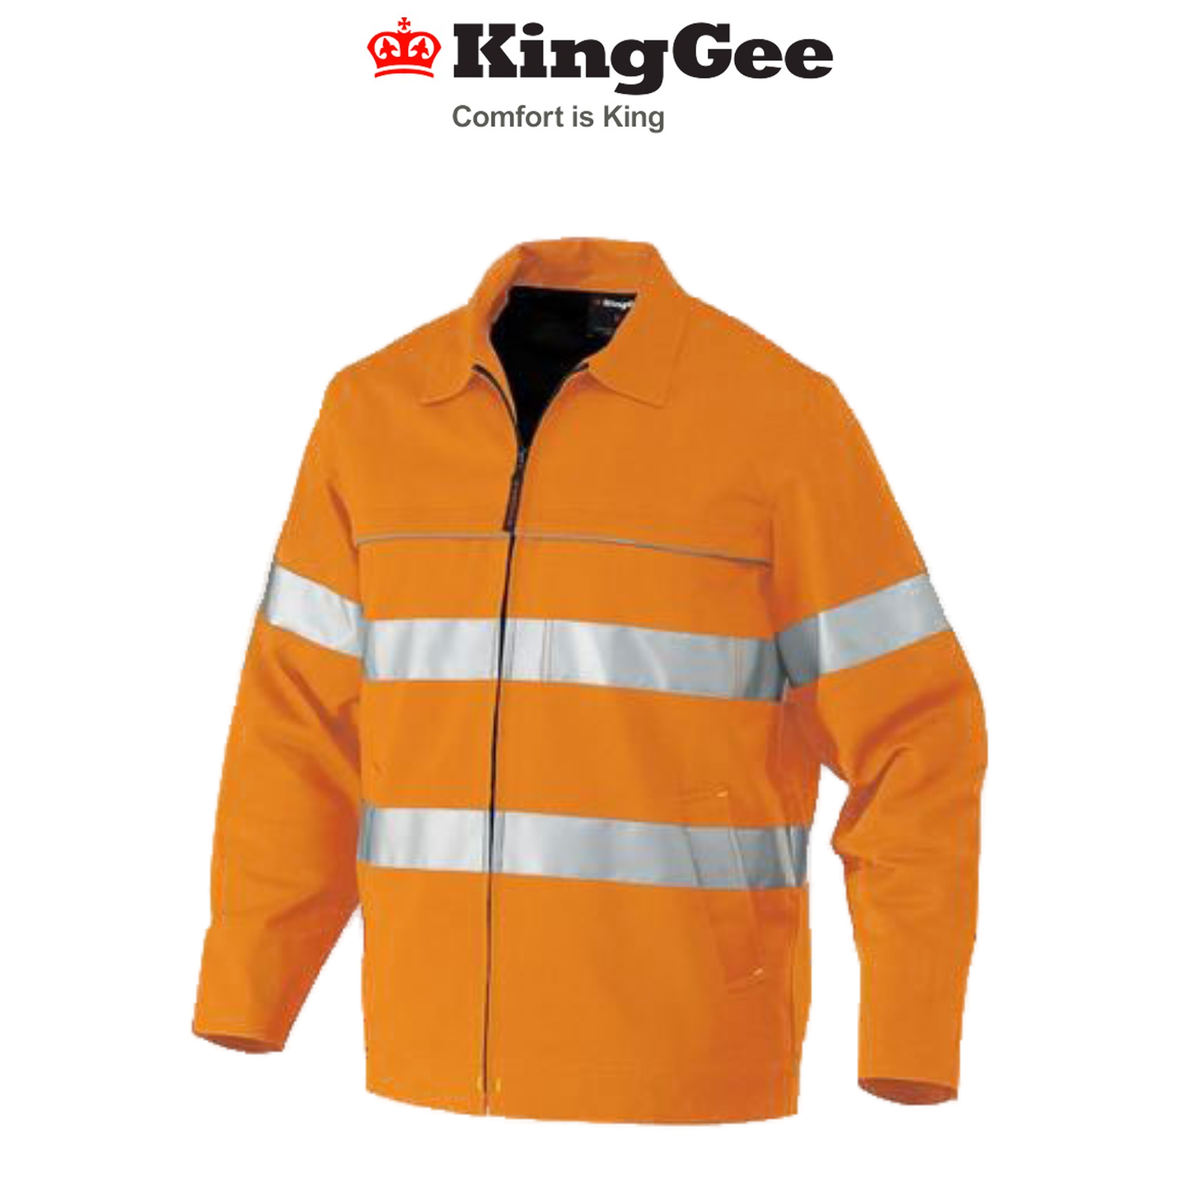 KingGee Mens Reflective Nano-Tex Hi-Vis Heavy Duty Cotton Jacket Work K55805